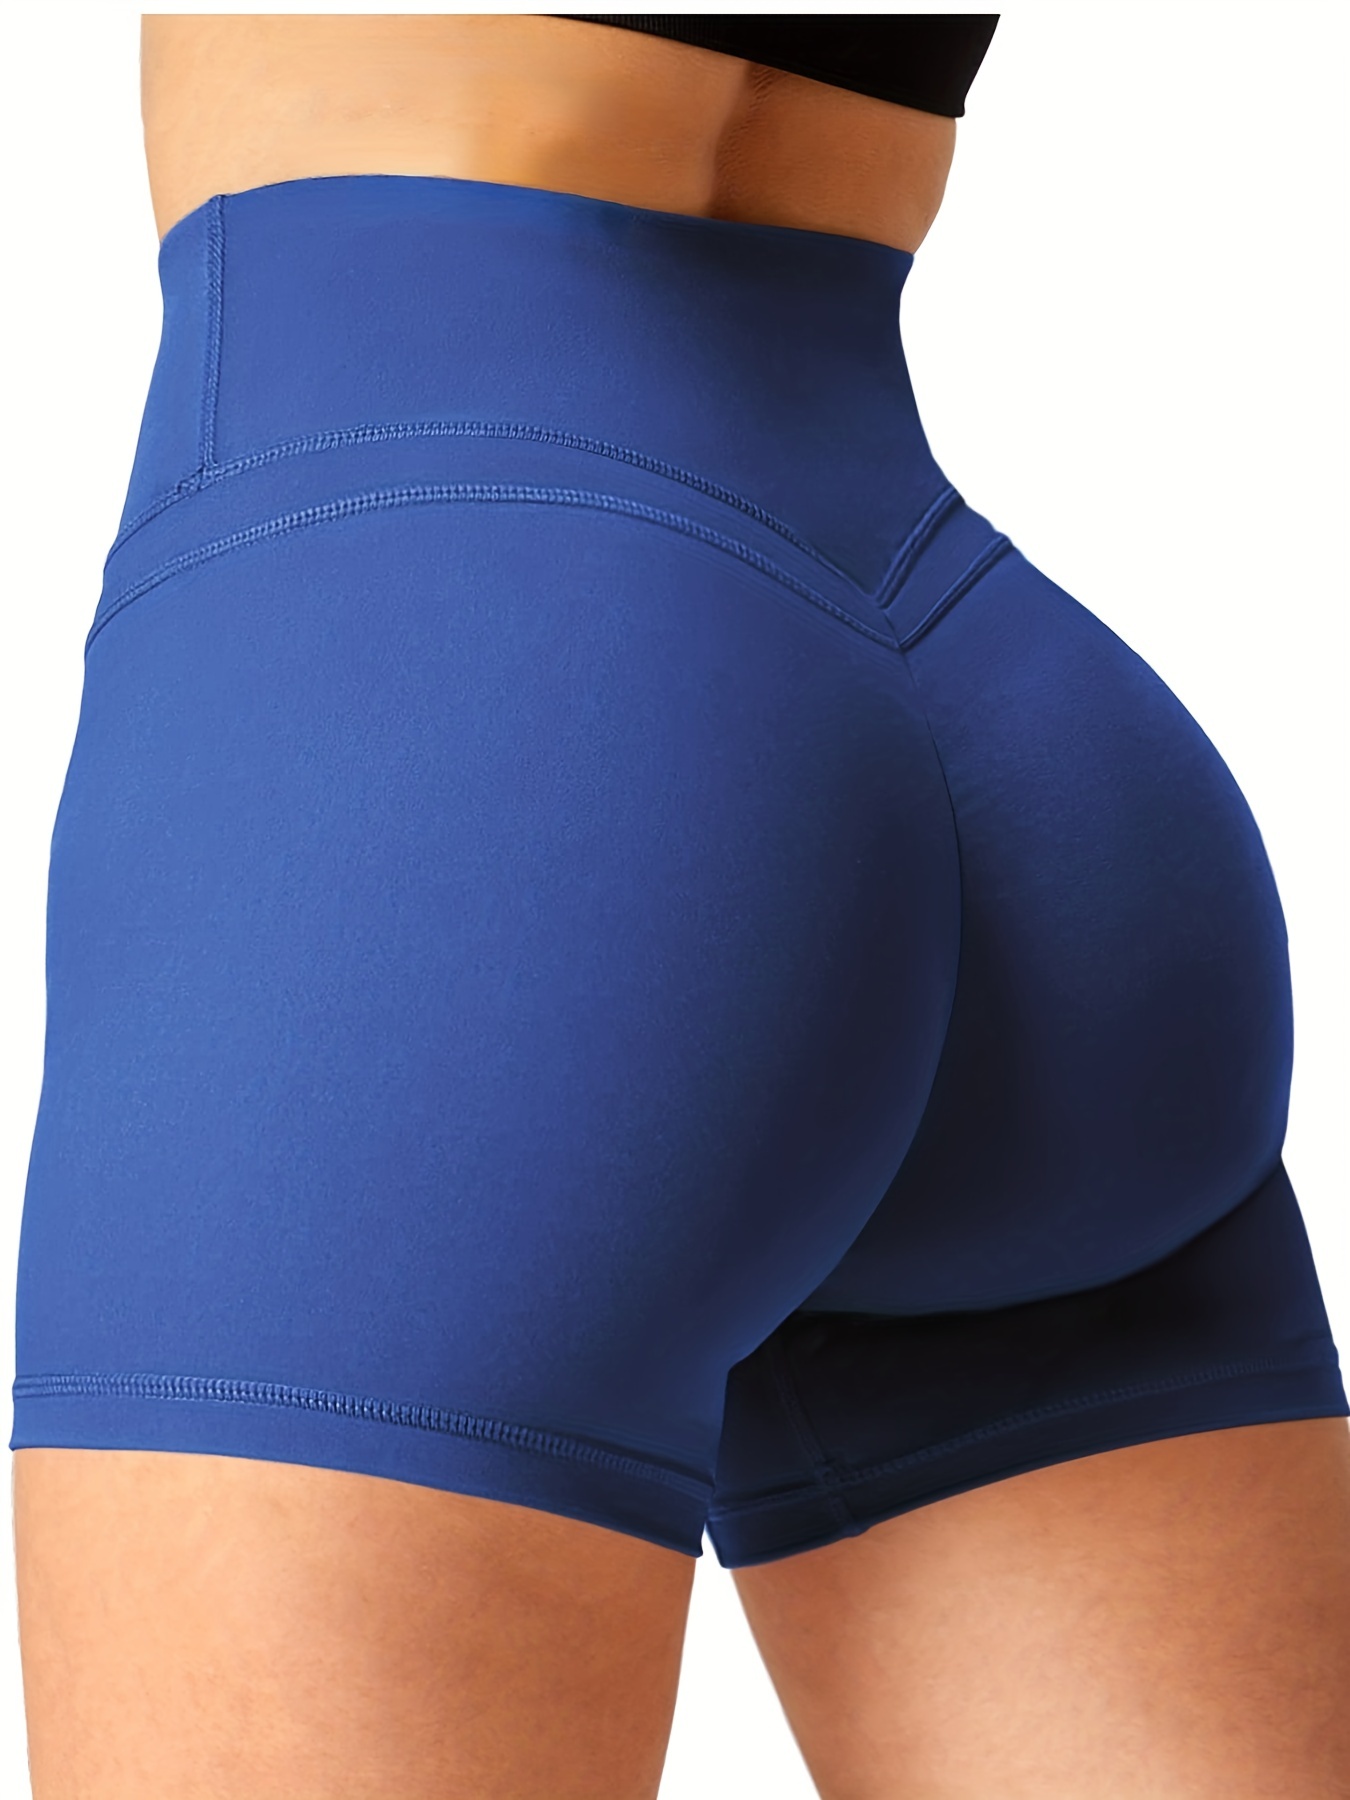 Beneunder Women High Waist Workout Gym Leggings Bike Shorts Blue 160/90 M -  Yamibuy.com